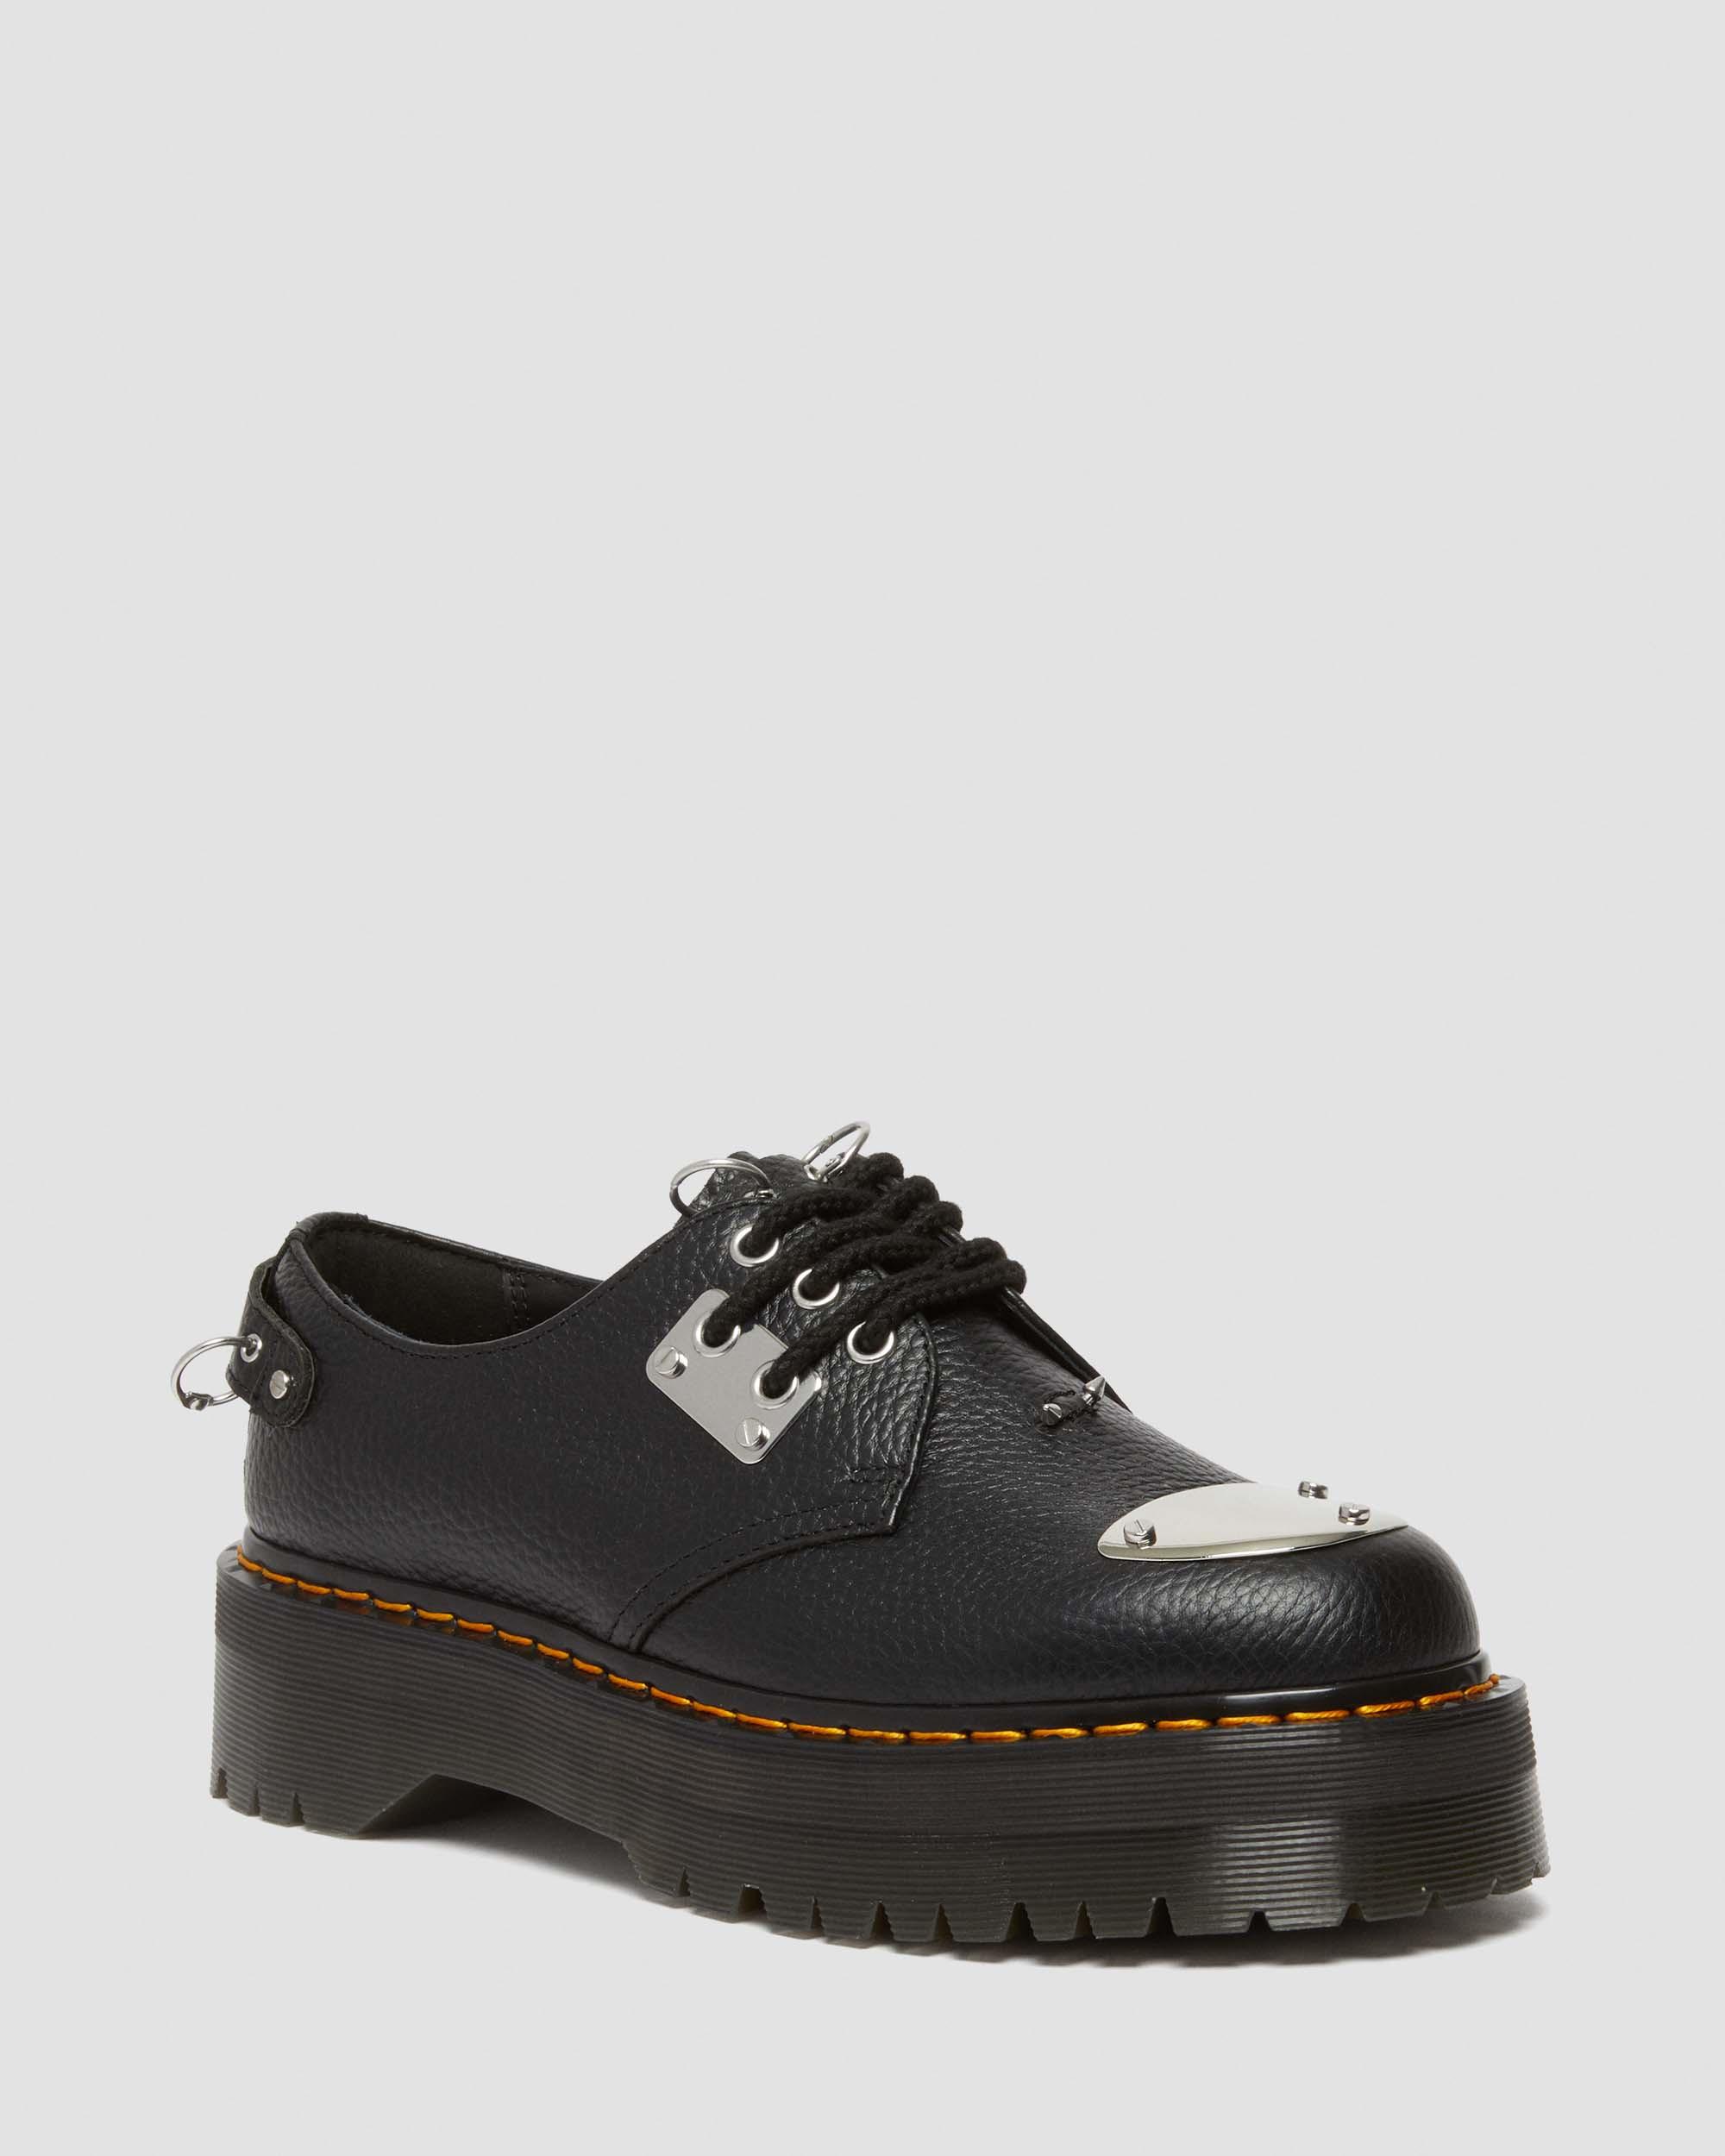 1461 Women's Virginia Leather Oxford Shoes, Black | Dr. Martens